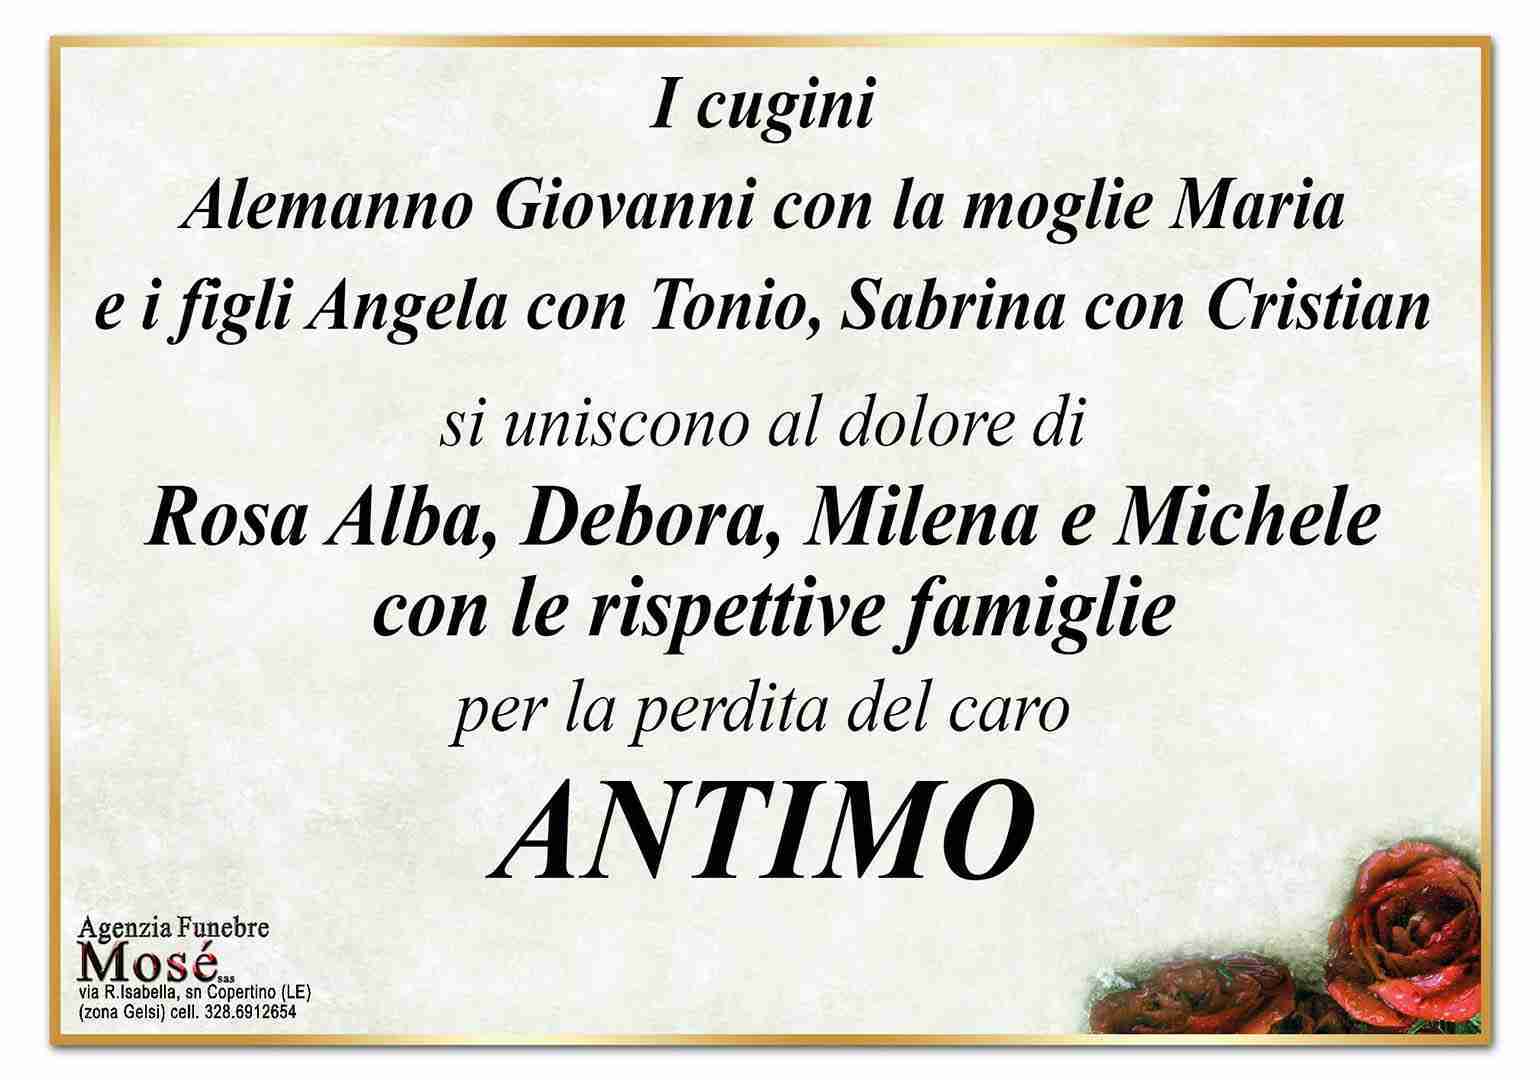 Antimo Antonio Miccoli